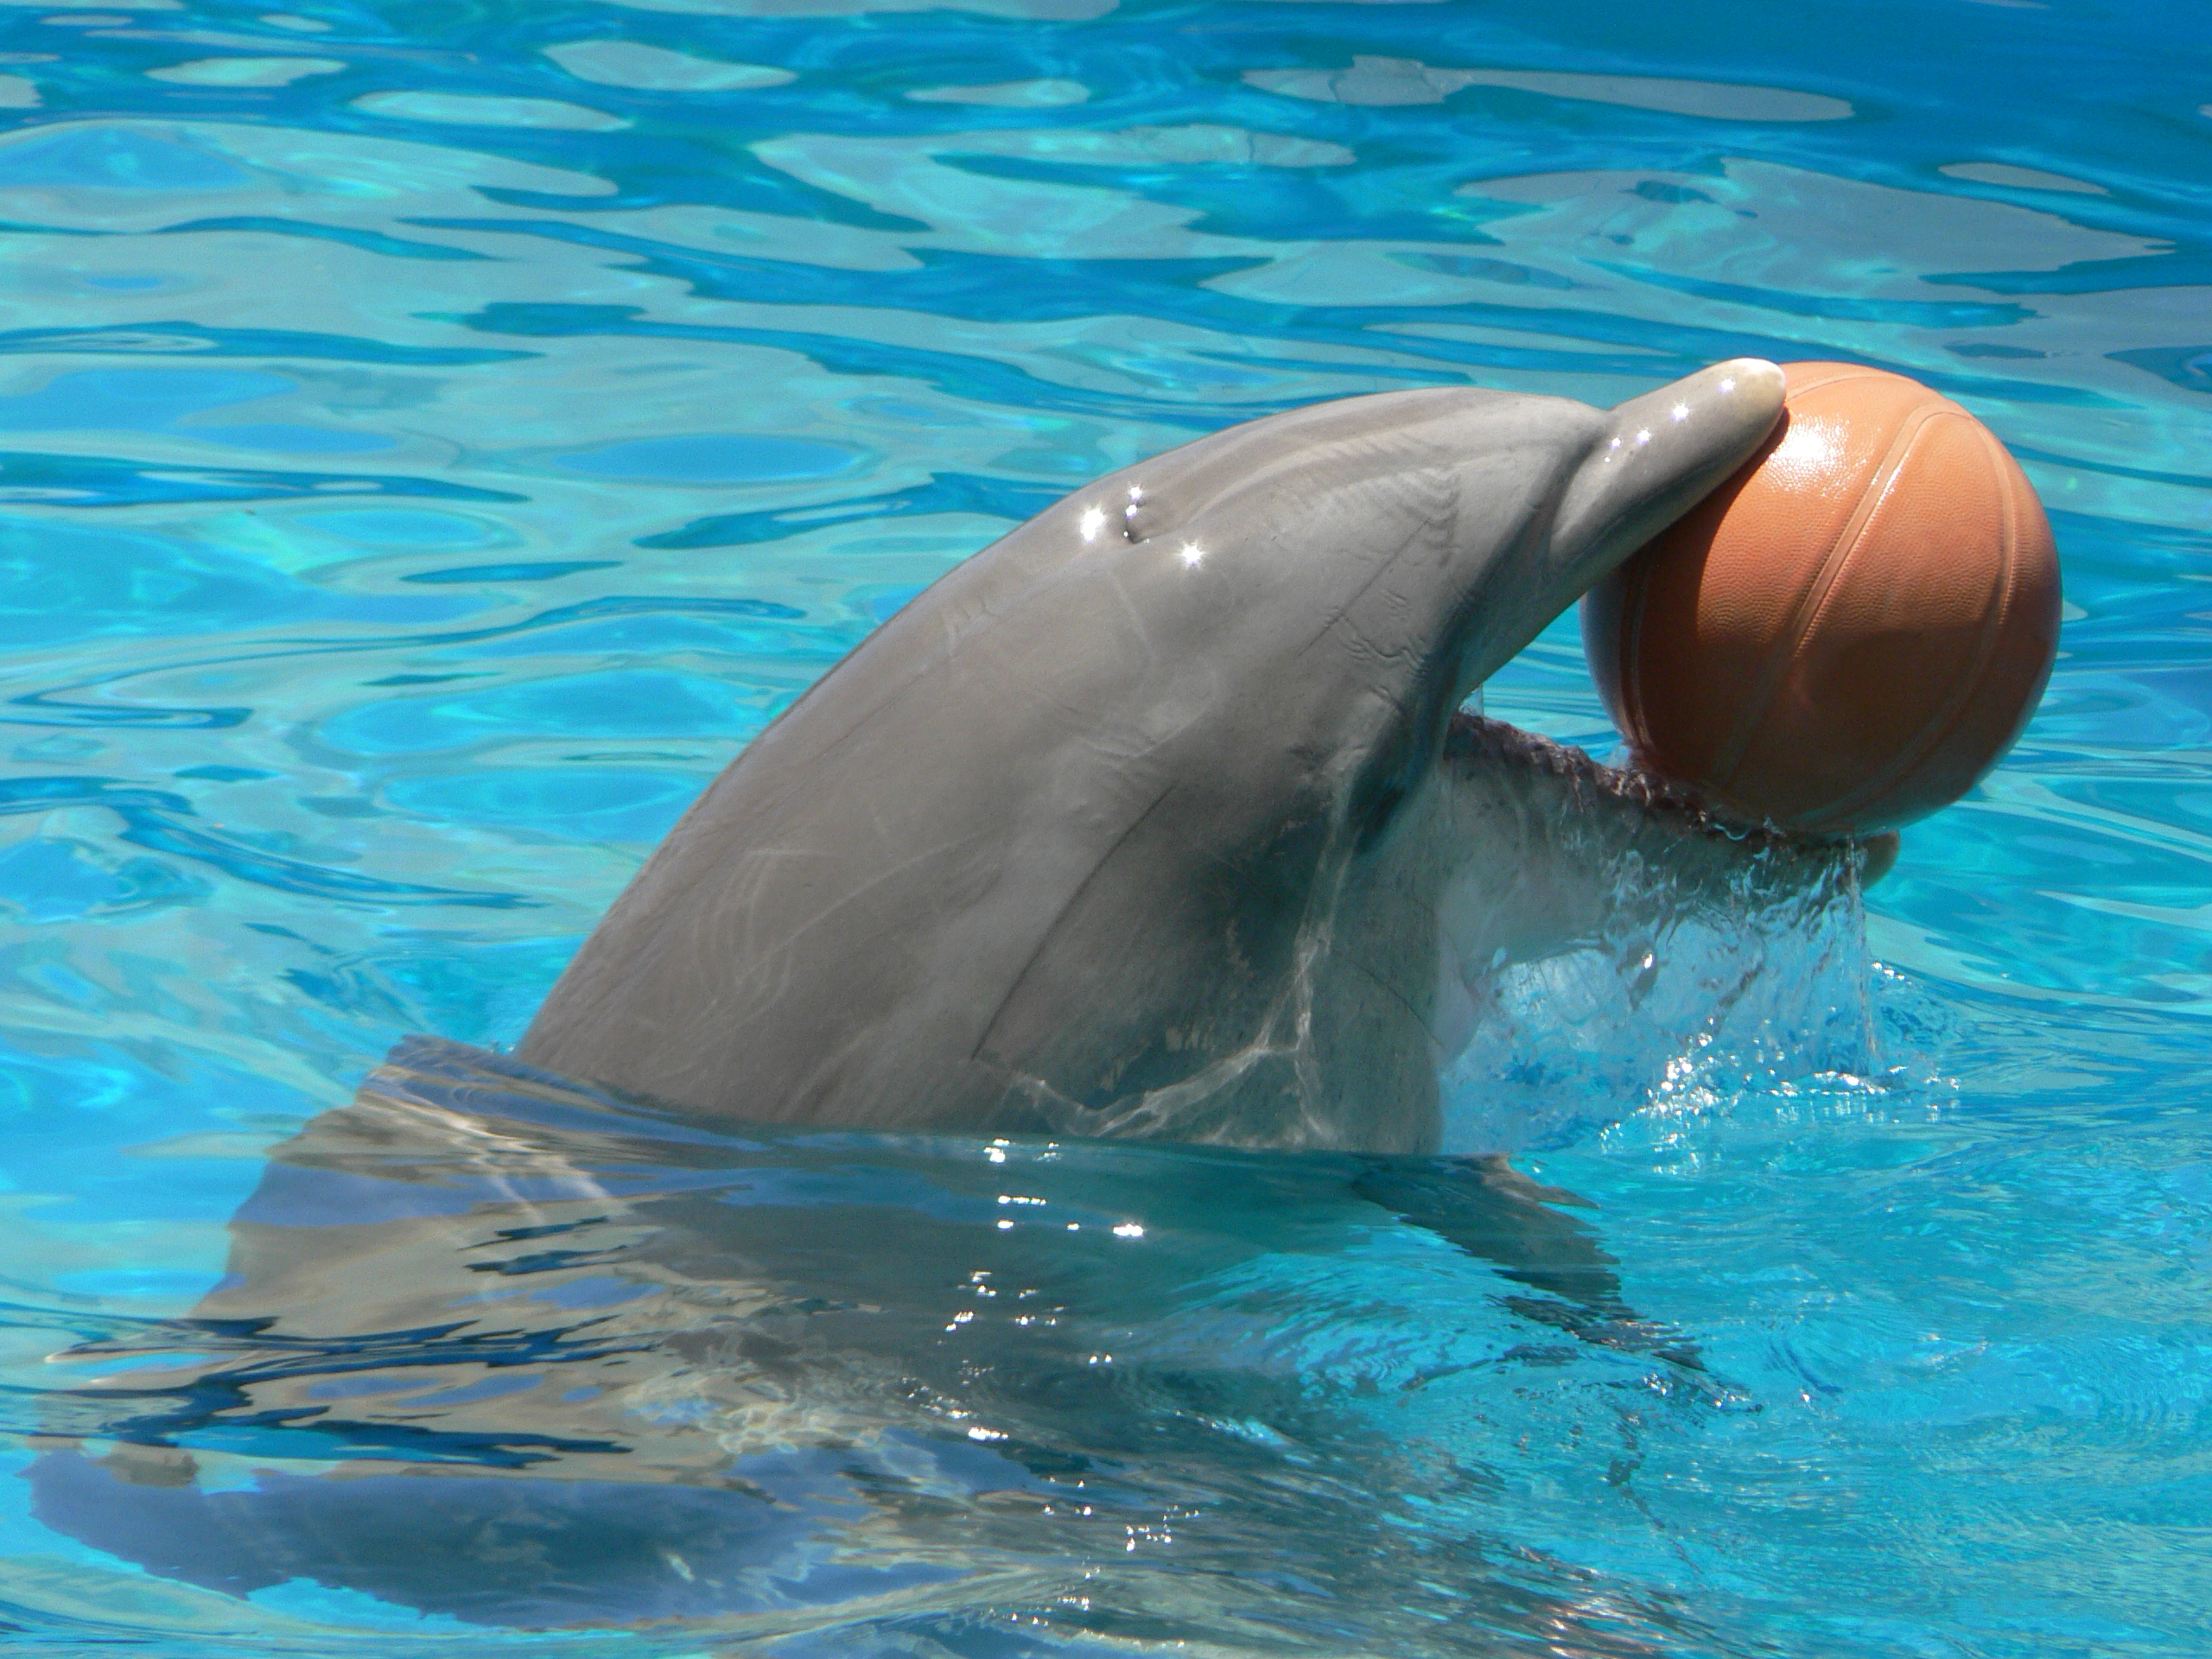 Dolphin ball